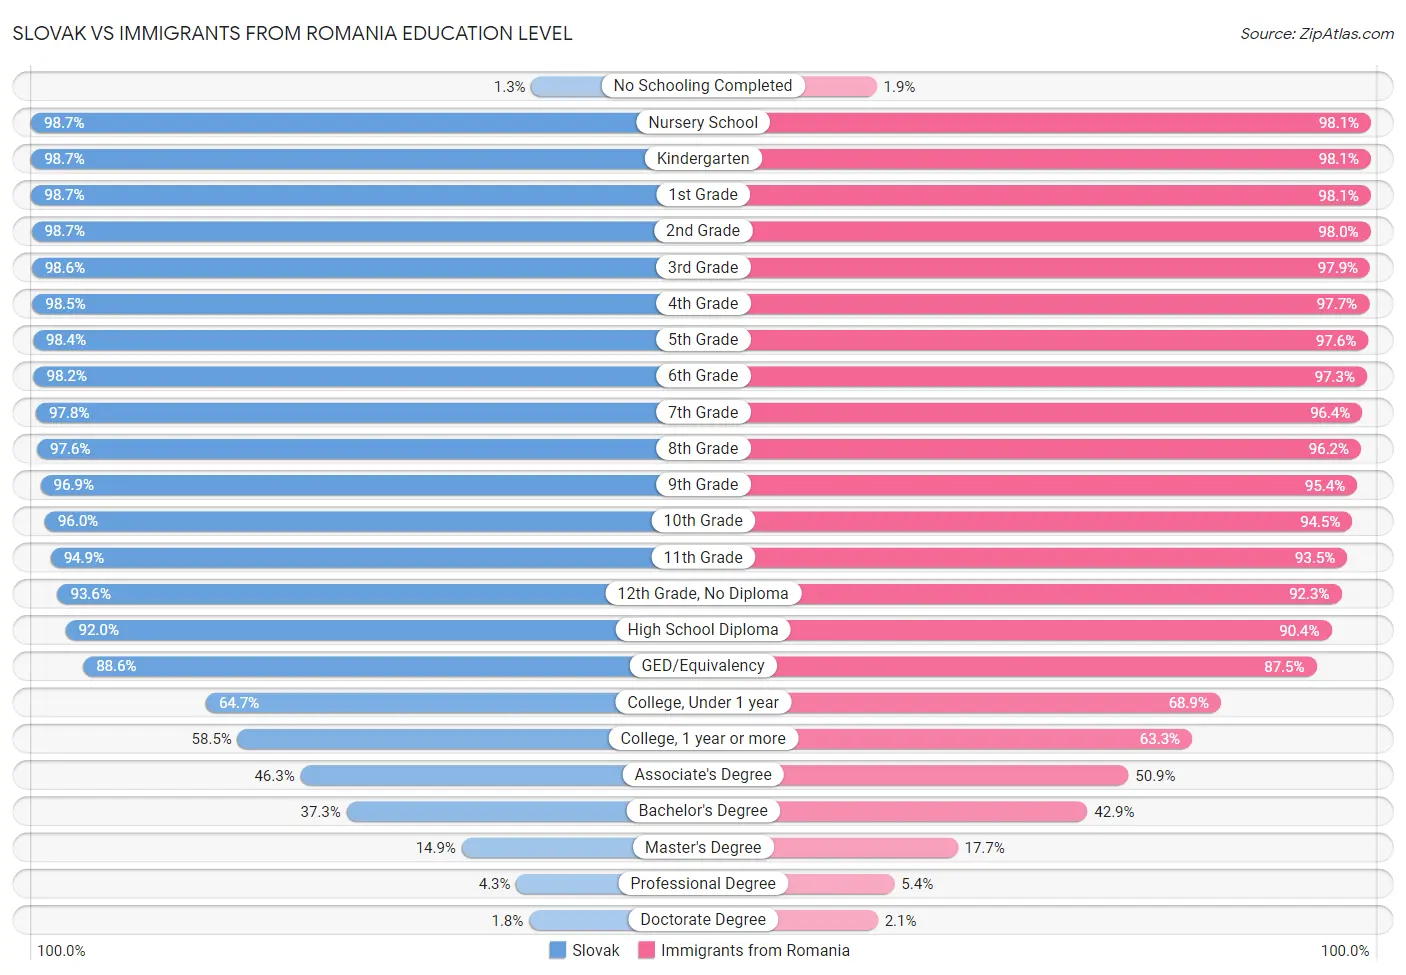 Slovak vs Immigrants from Romania Education Level